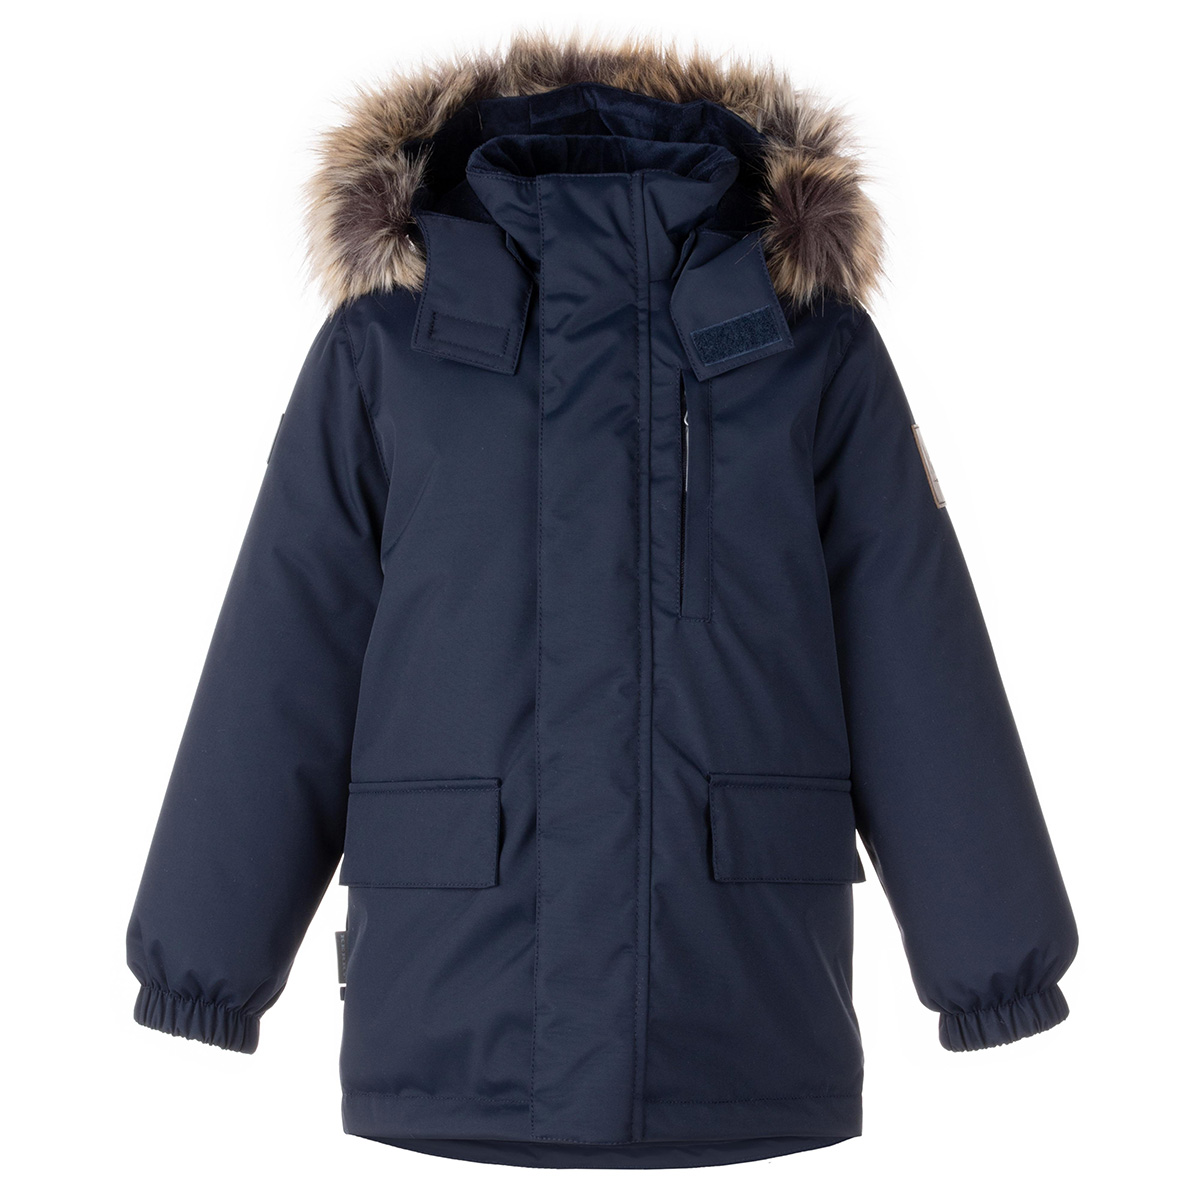 Парка детская KERRY Snow K23441, темно-синий, 116 куртка quiksilver travis rice snow jacket for boy s insignia blue р 12